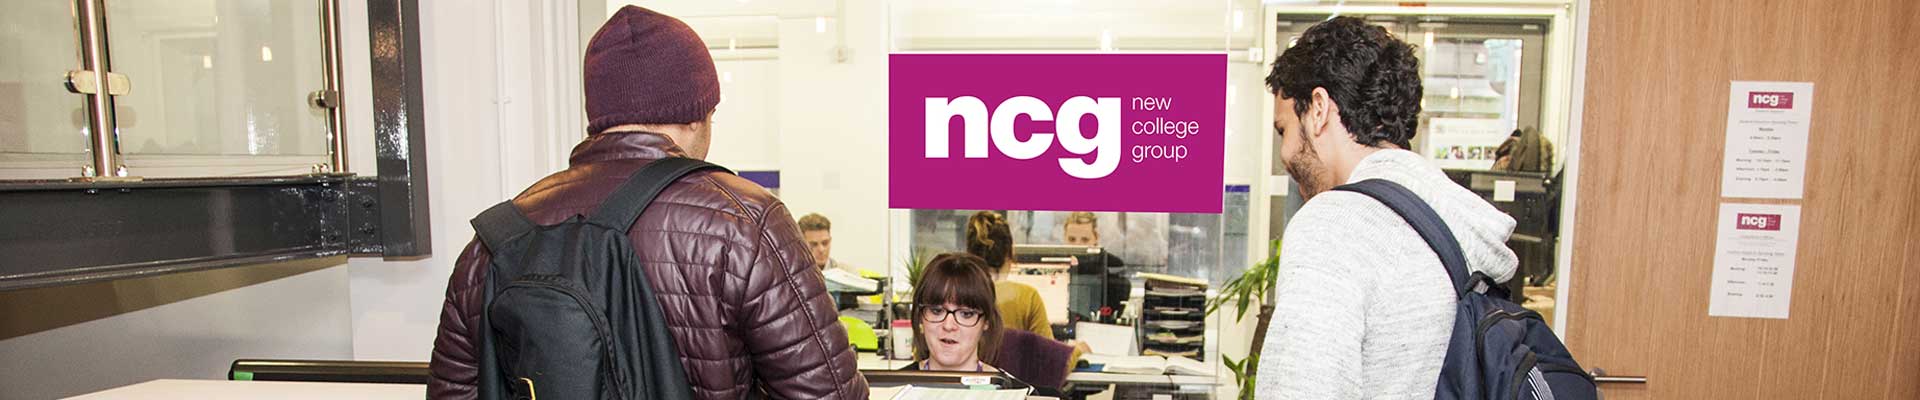 New College Group (NCG) - Liverpool görseli